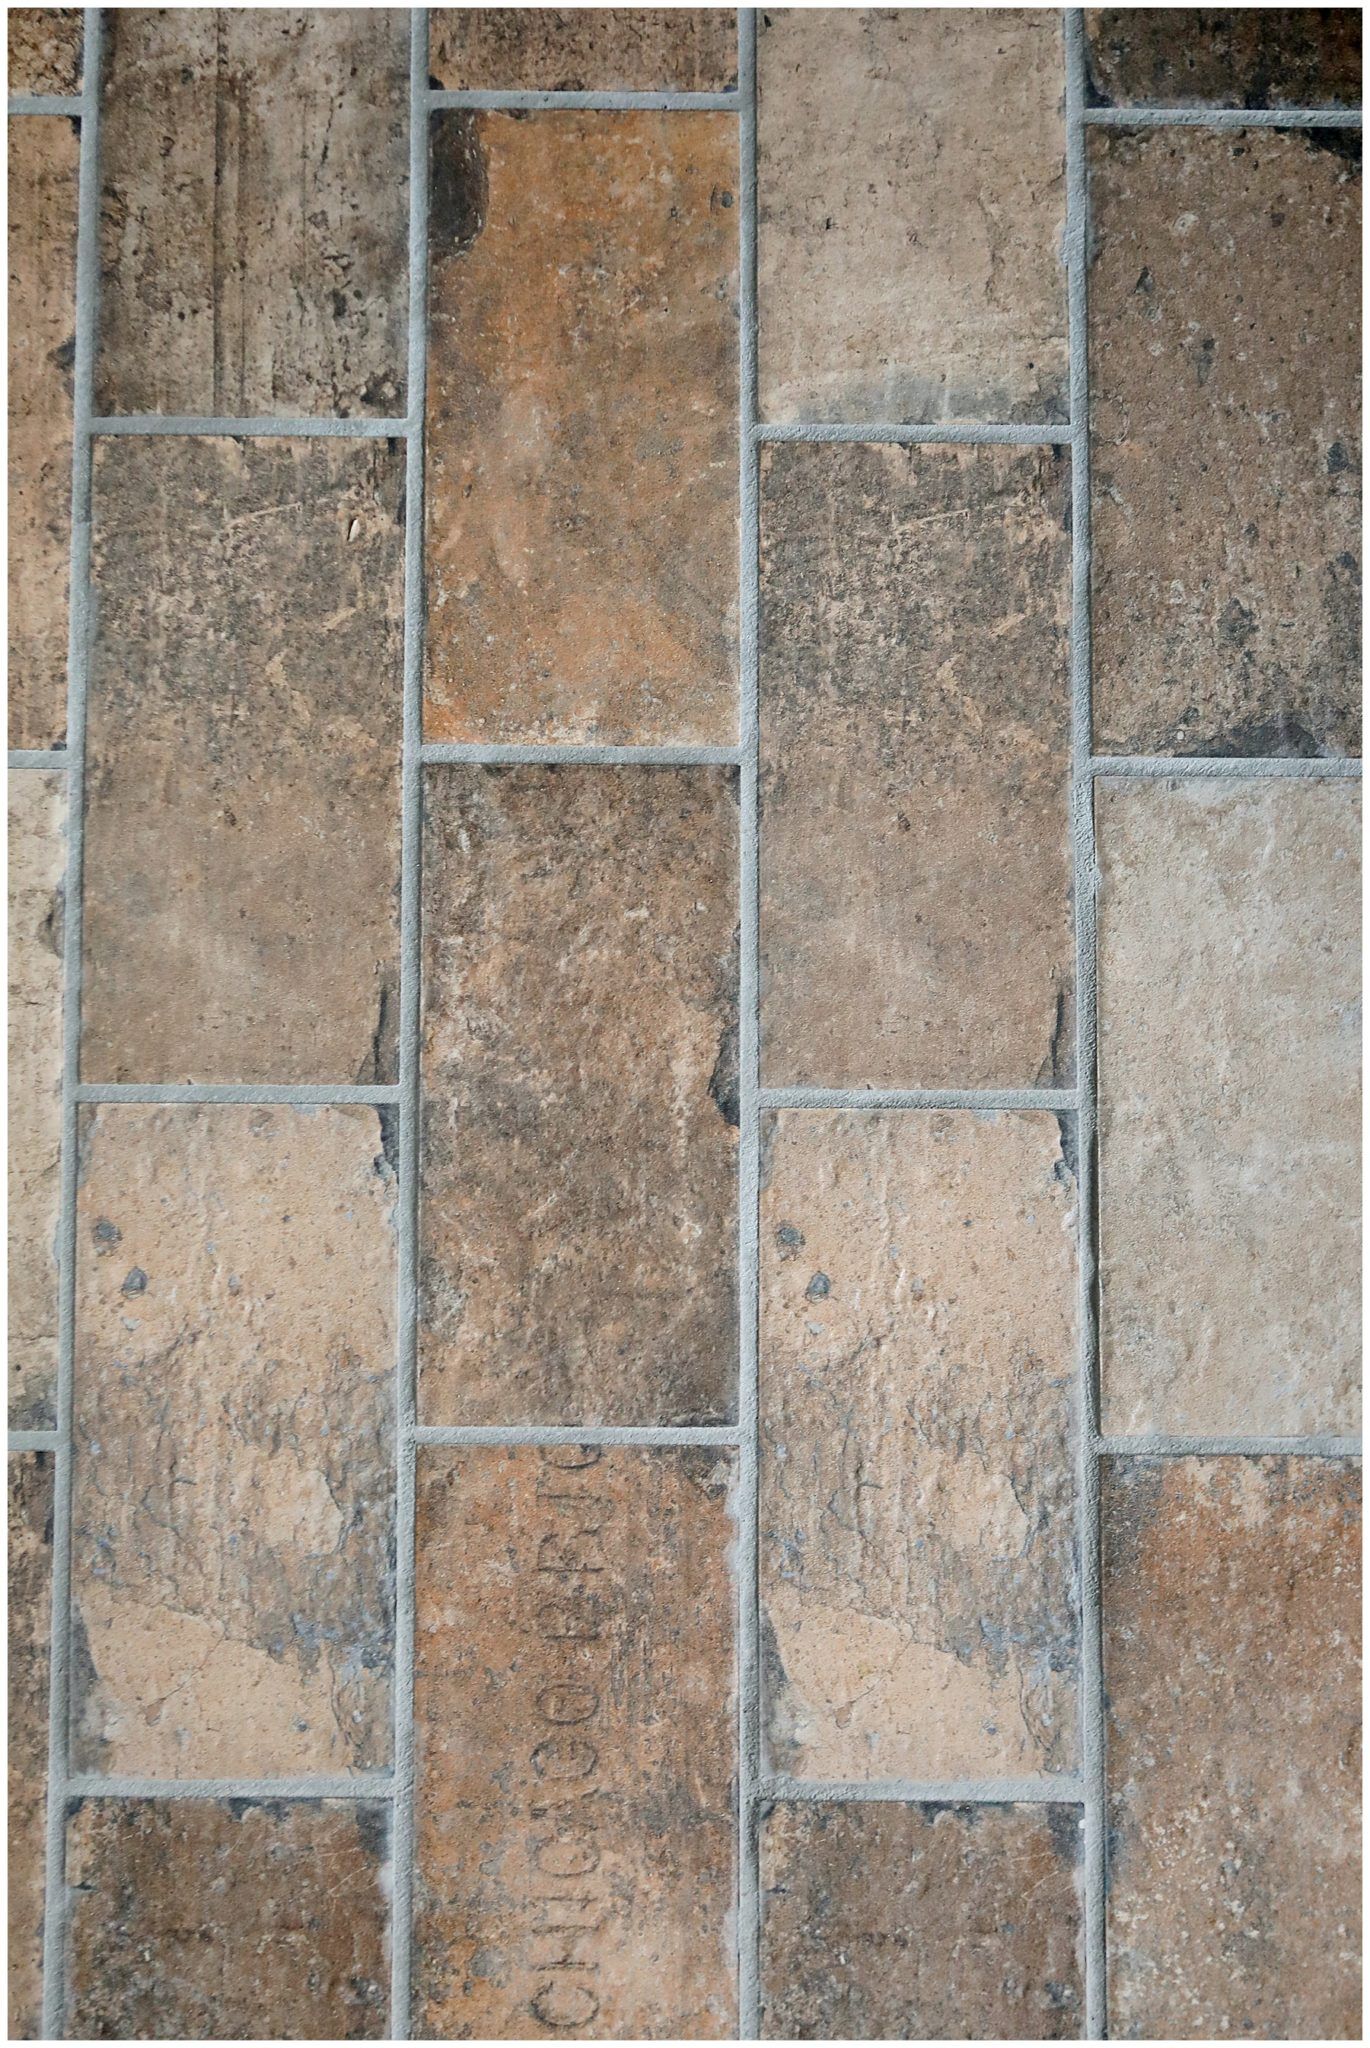 Brick tile flooring